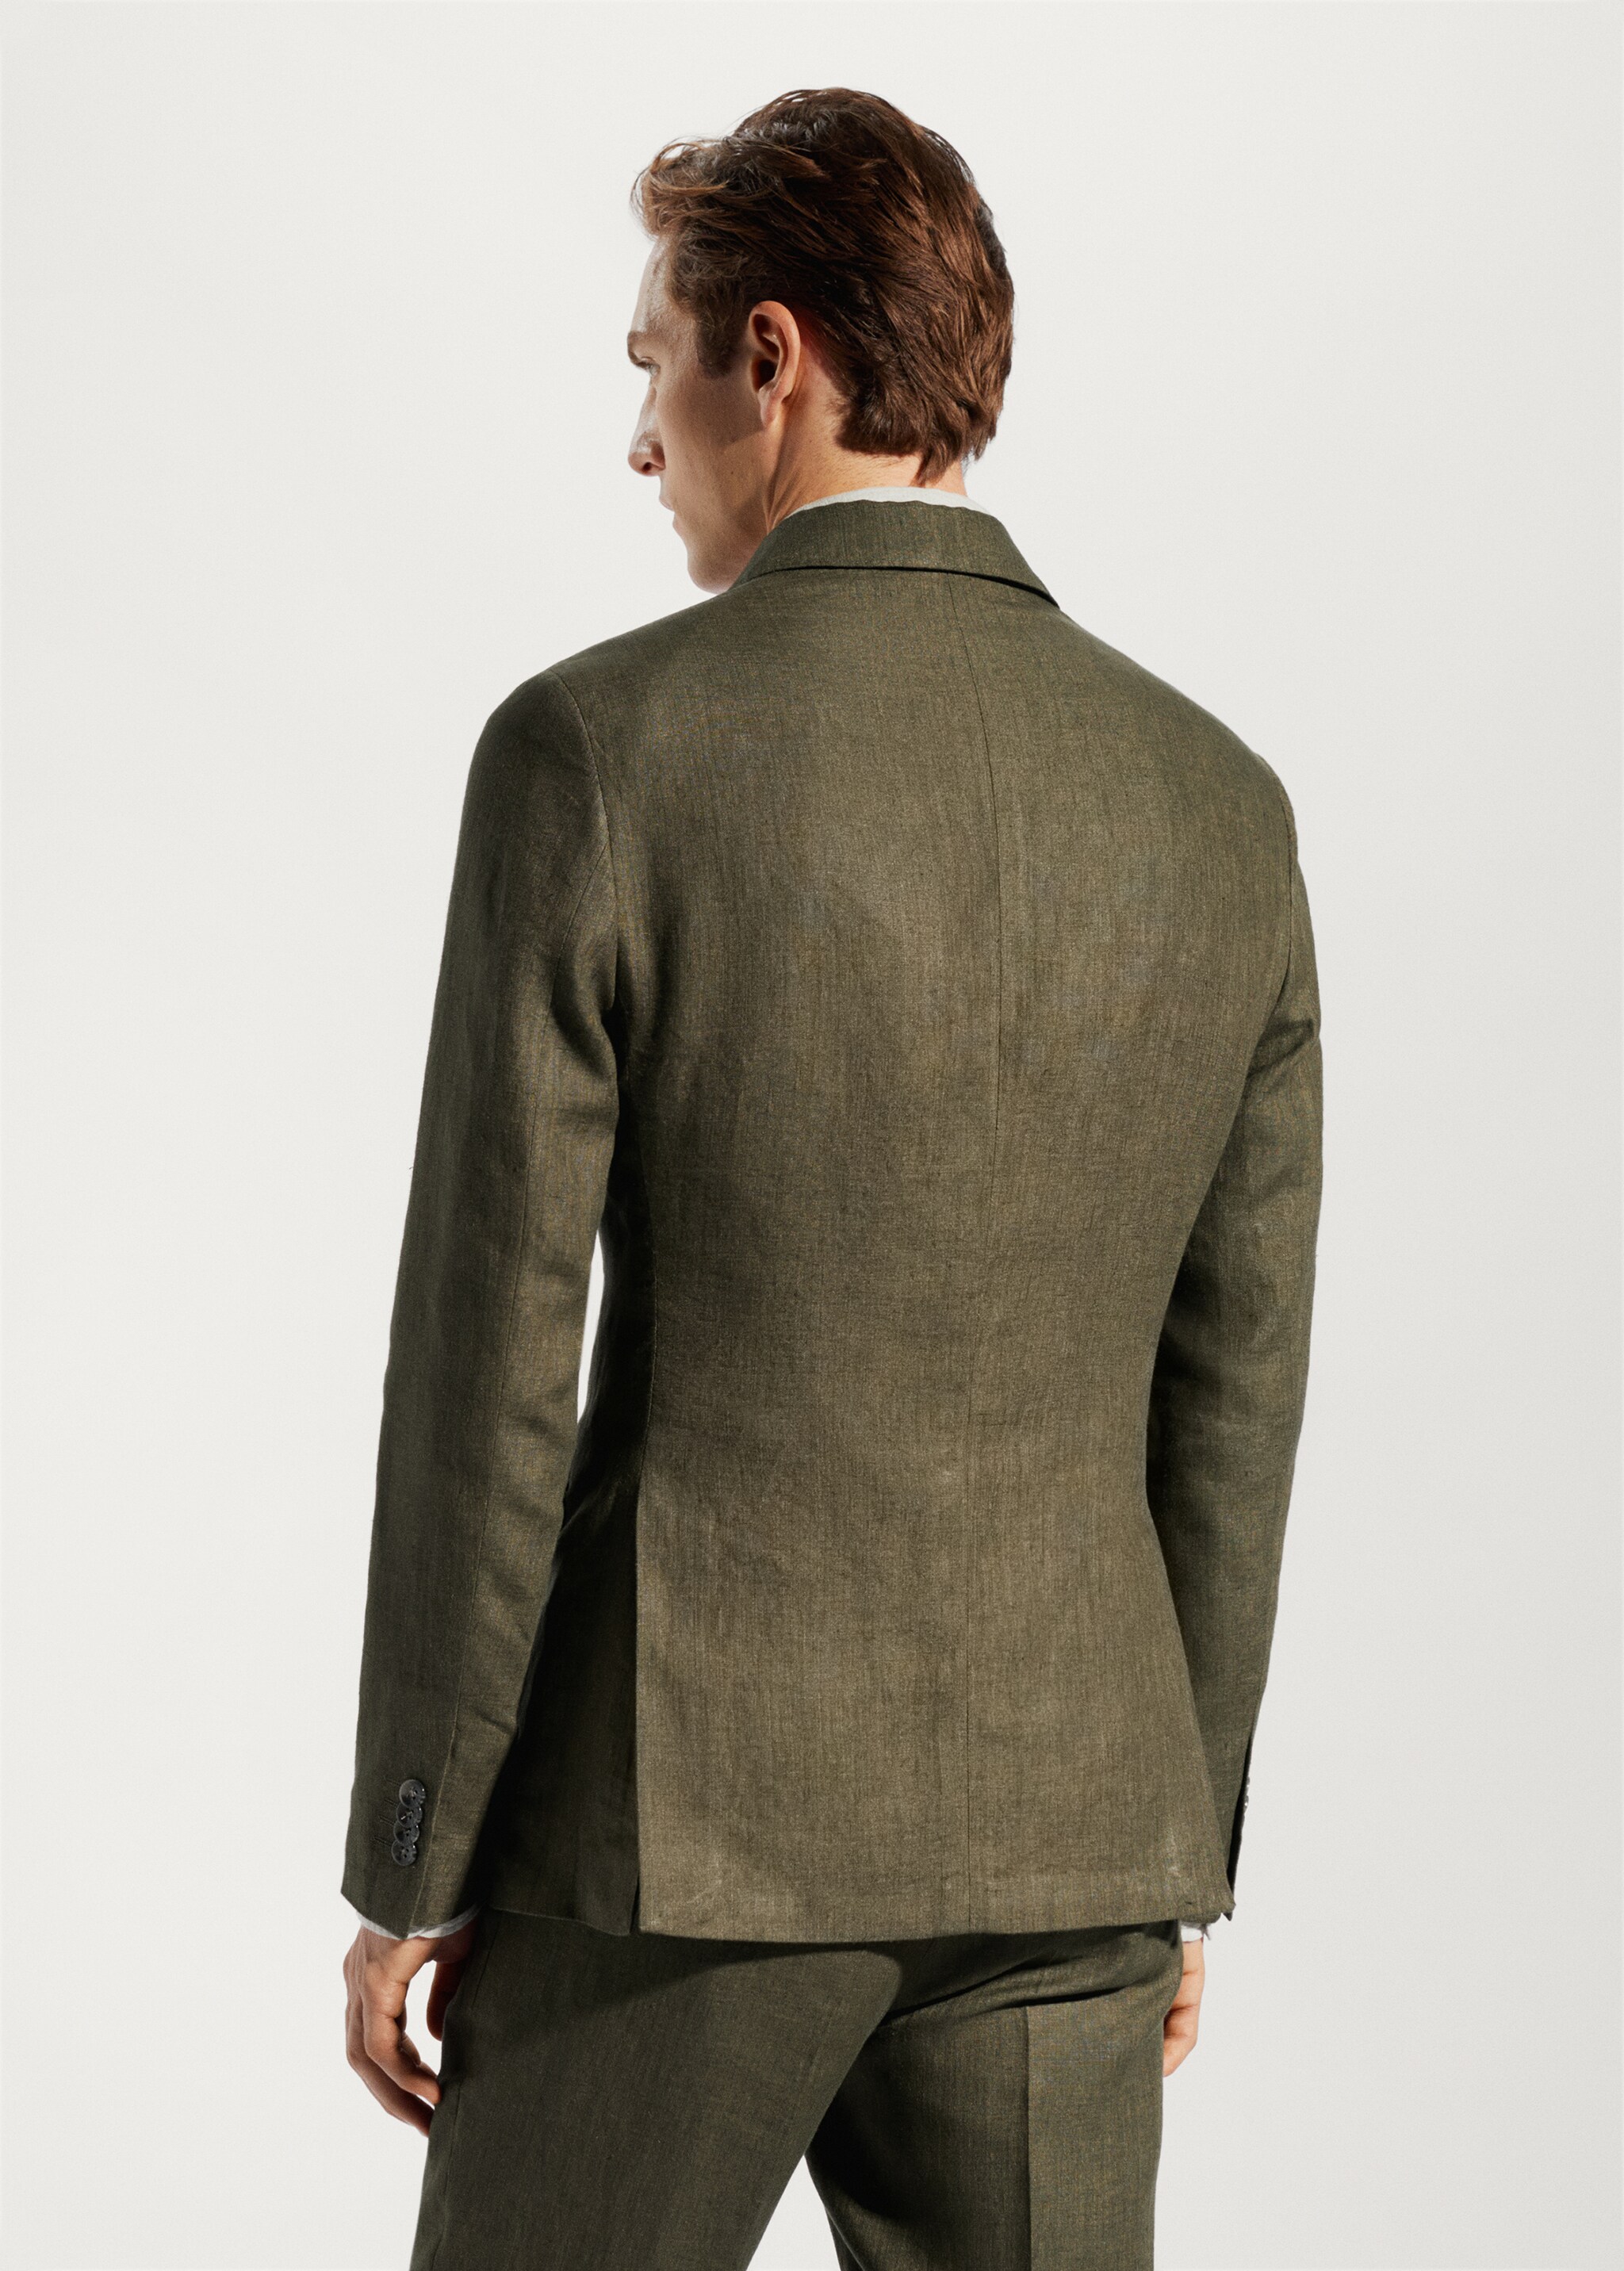 Blazer suit 100% linen - Reverse of the article